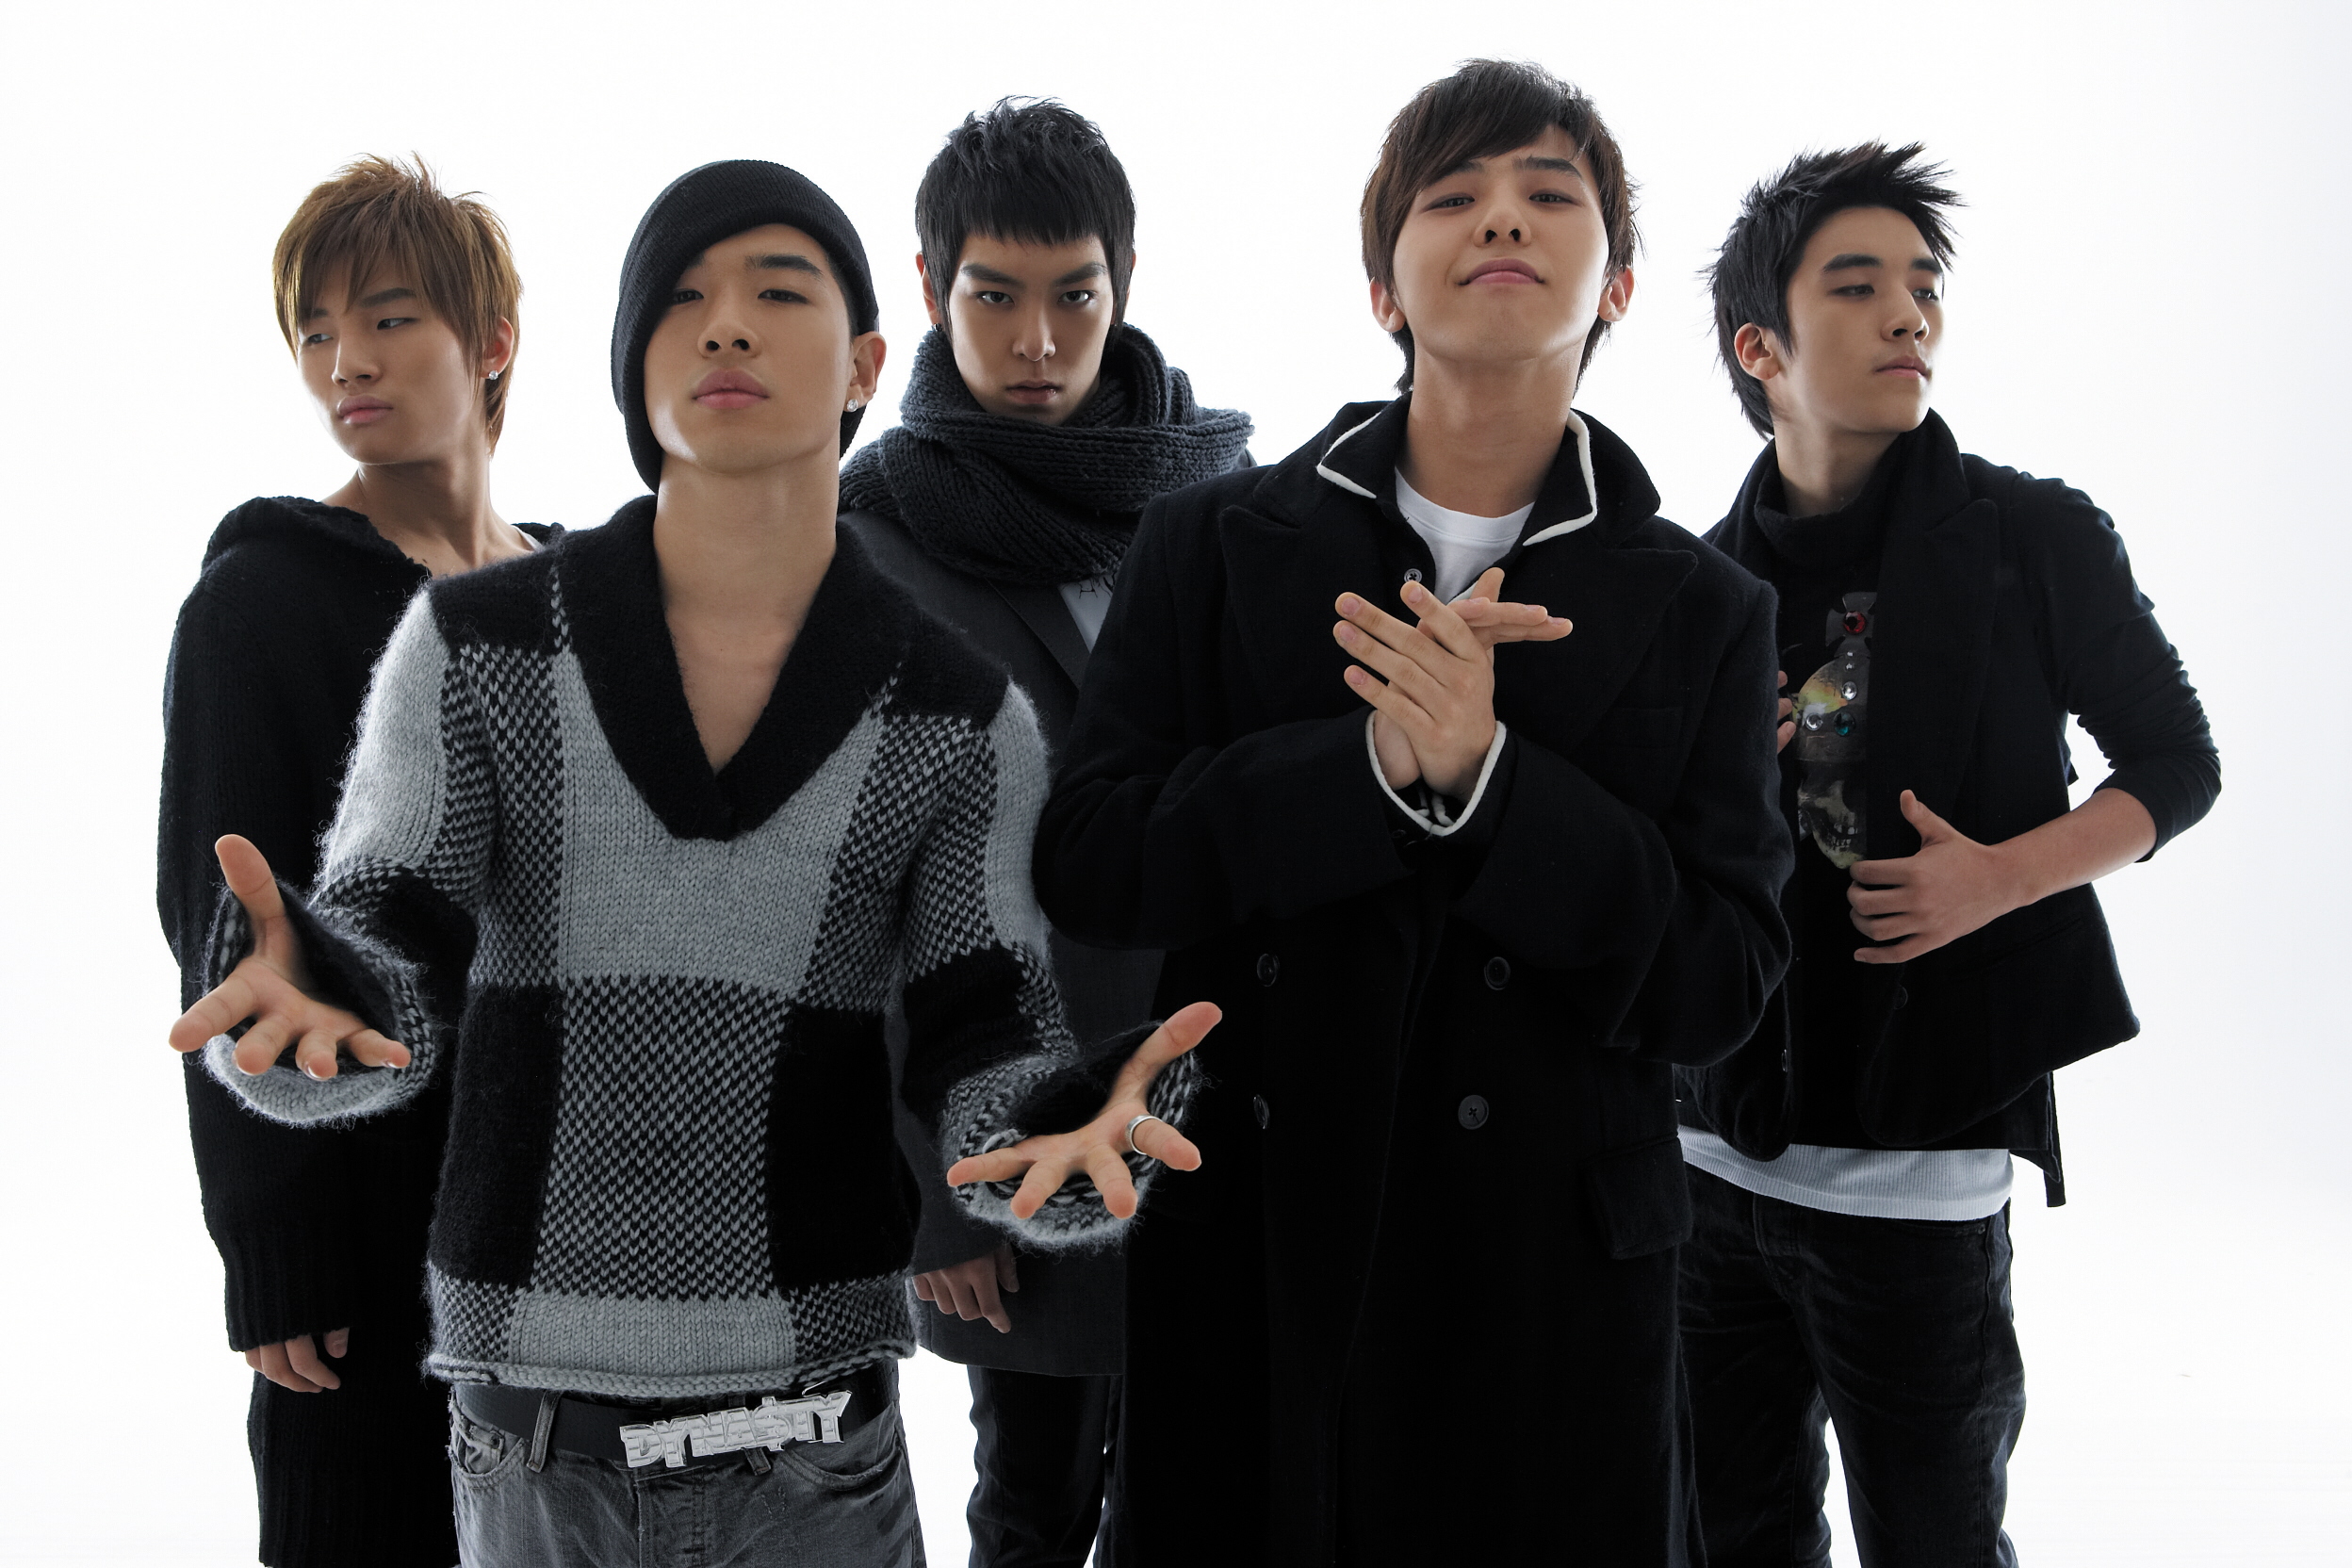 Big Bang Sono Una Band Hip Hop Sud Coreana Di Membri Formata Dalla